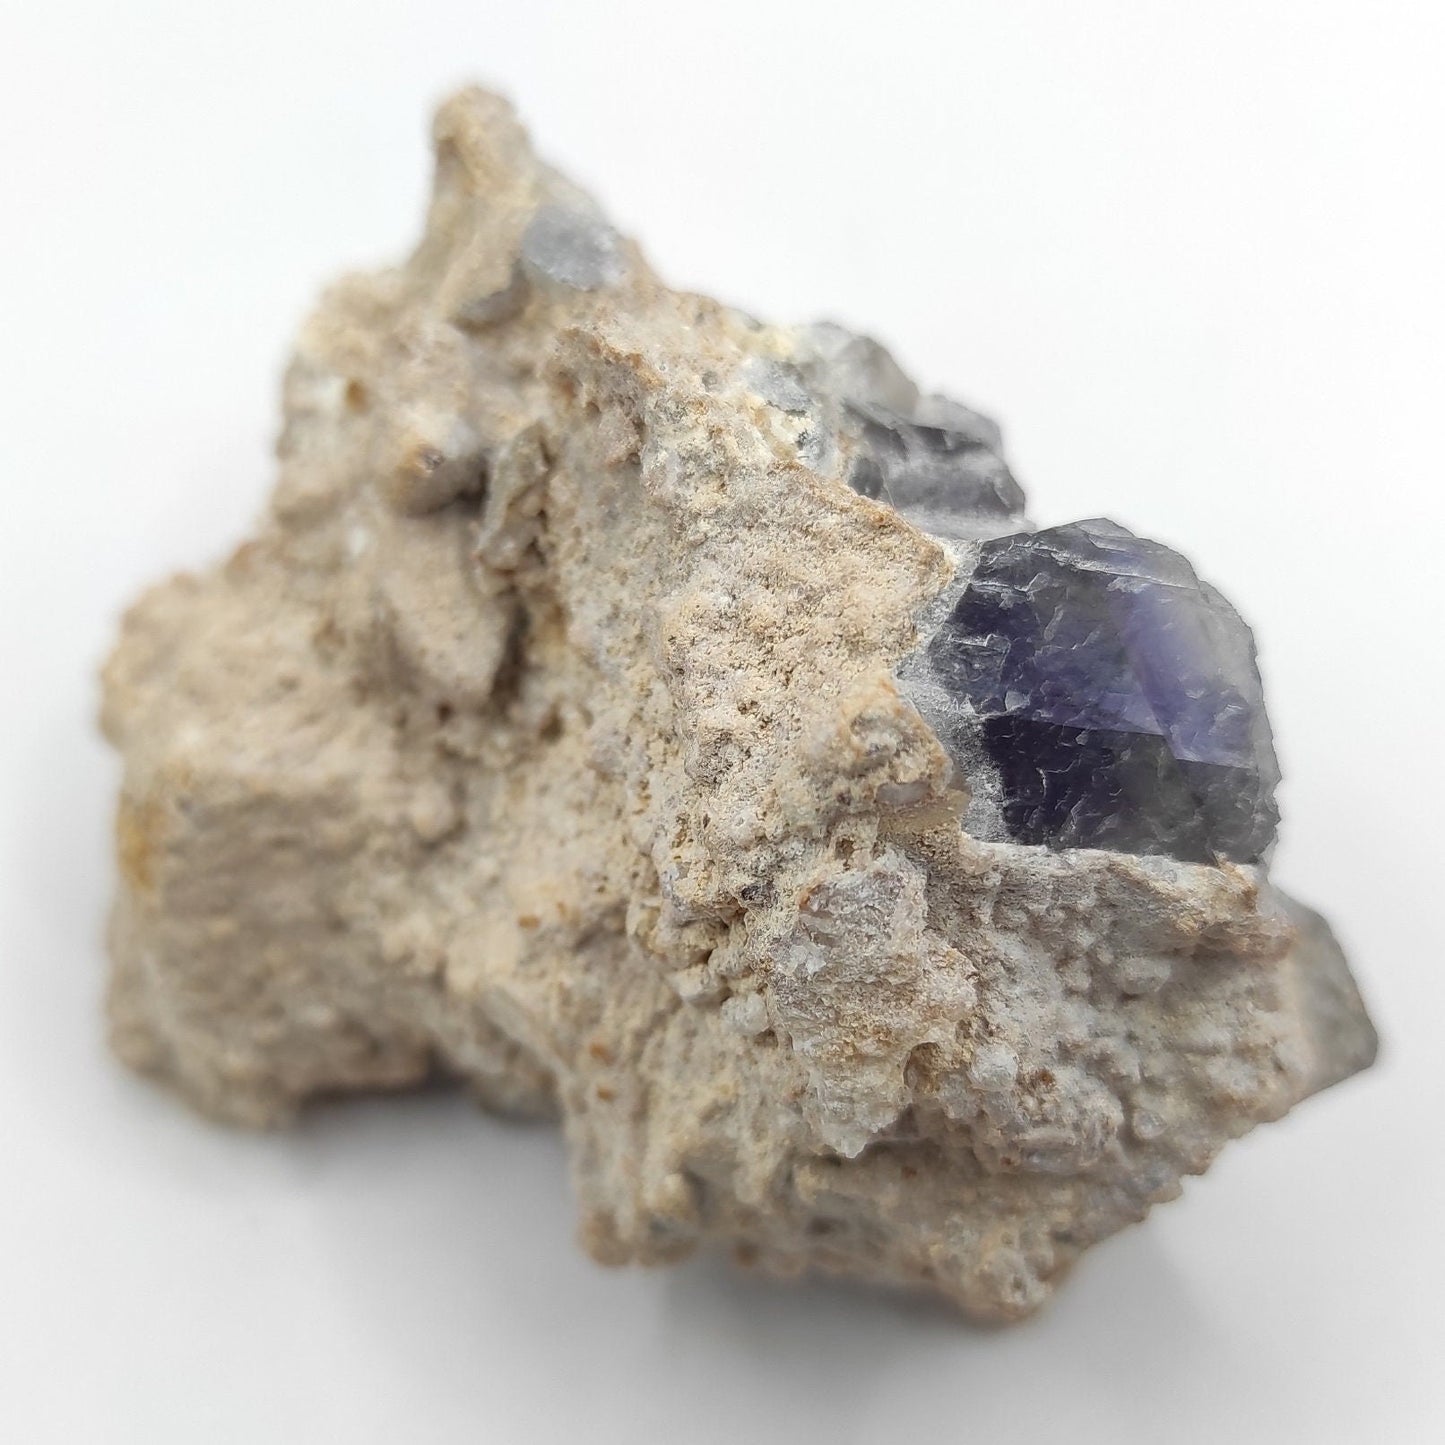 138g Grey & Purplish Blue Fluorite Crystal - Natural Raw Purple Fluorite Mineral Specimen - Balochistan, Pakistan - Rough Cubic Fluorite